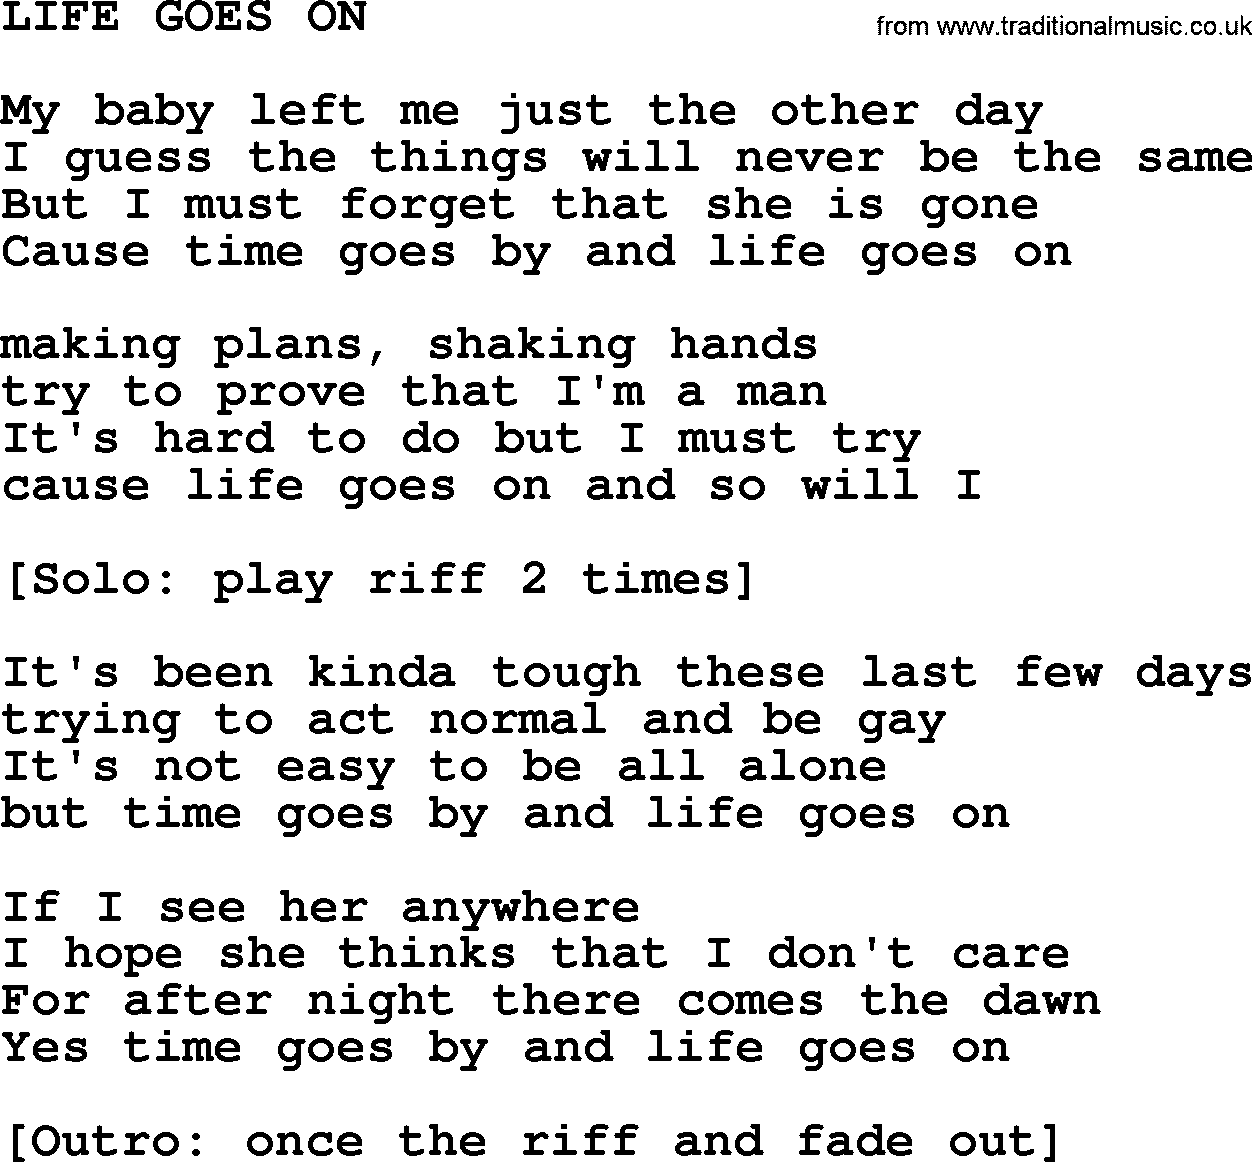 Johnny Cash song Life Goes On.txt lyrics